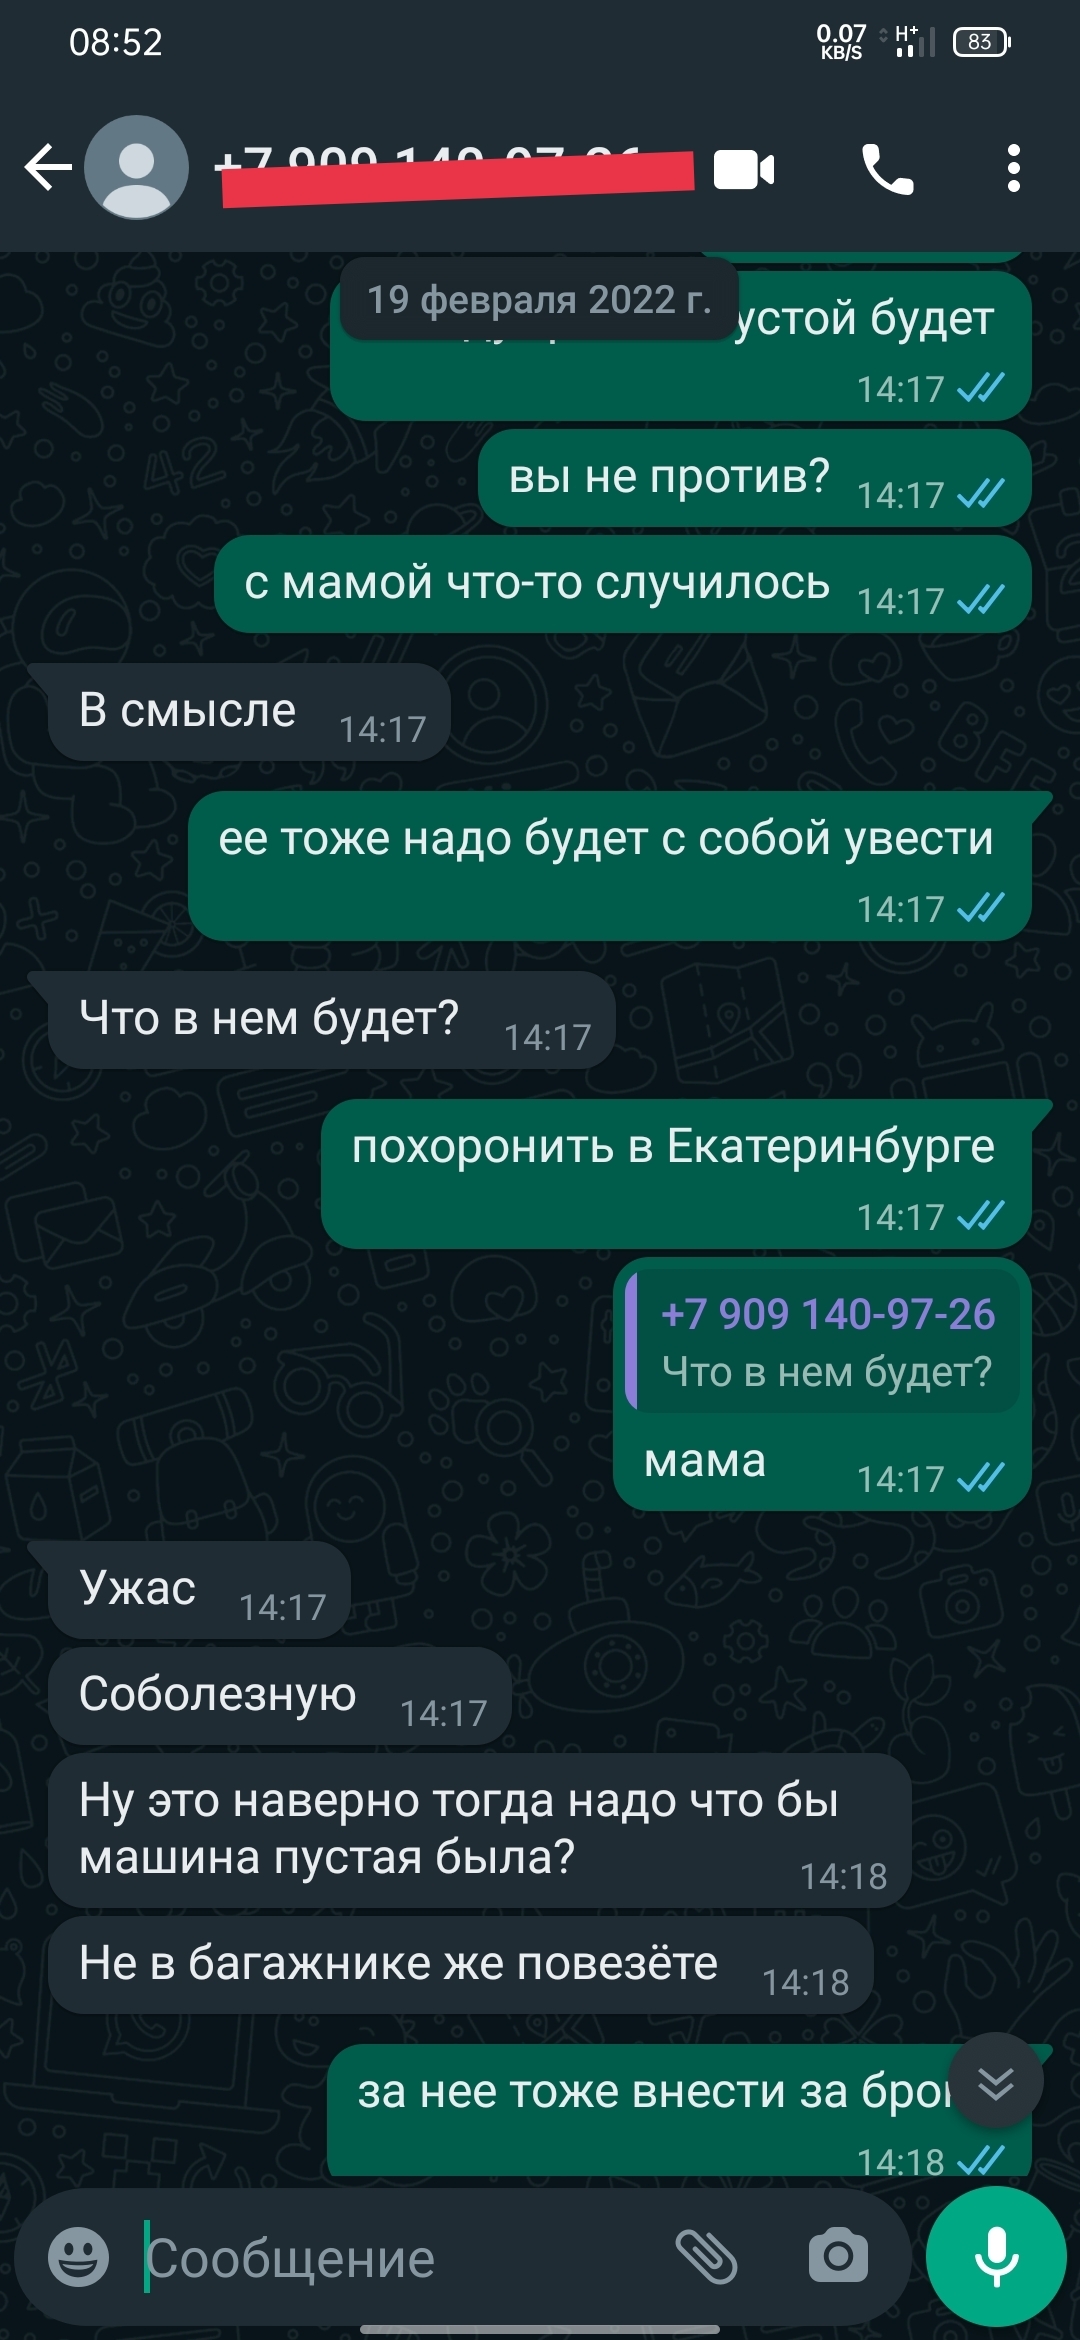 Blah blah scammers - Travel in Russia, Yekaterinburg, Permian, blah blah, Blablacar, Fraud, Longpost